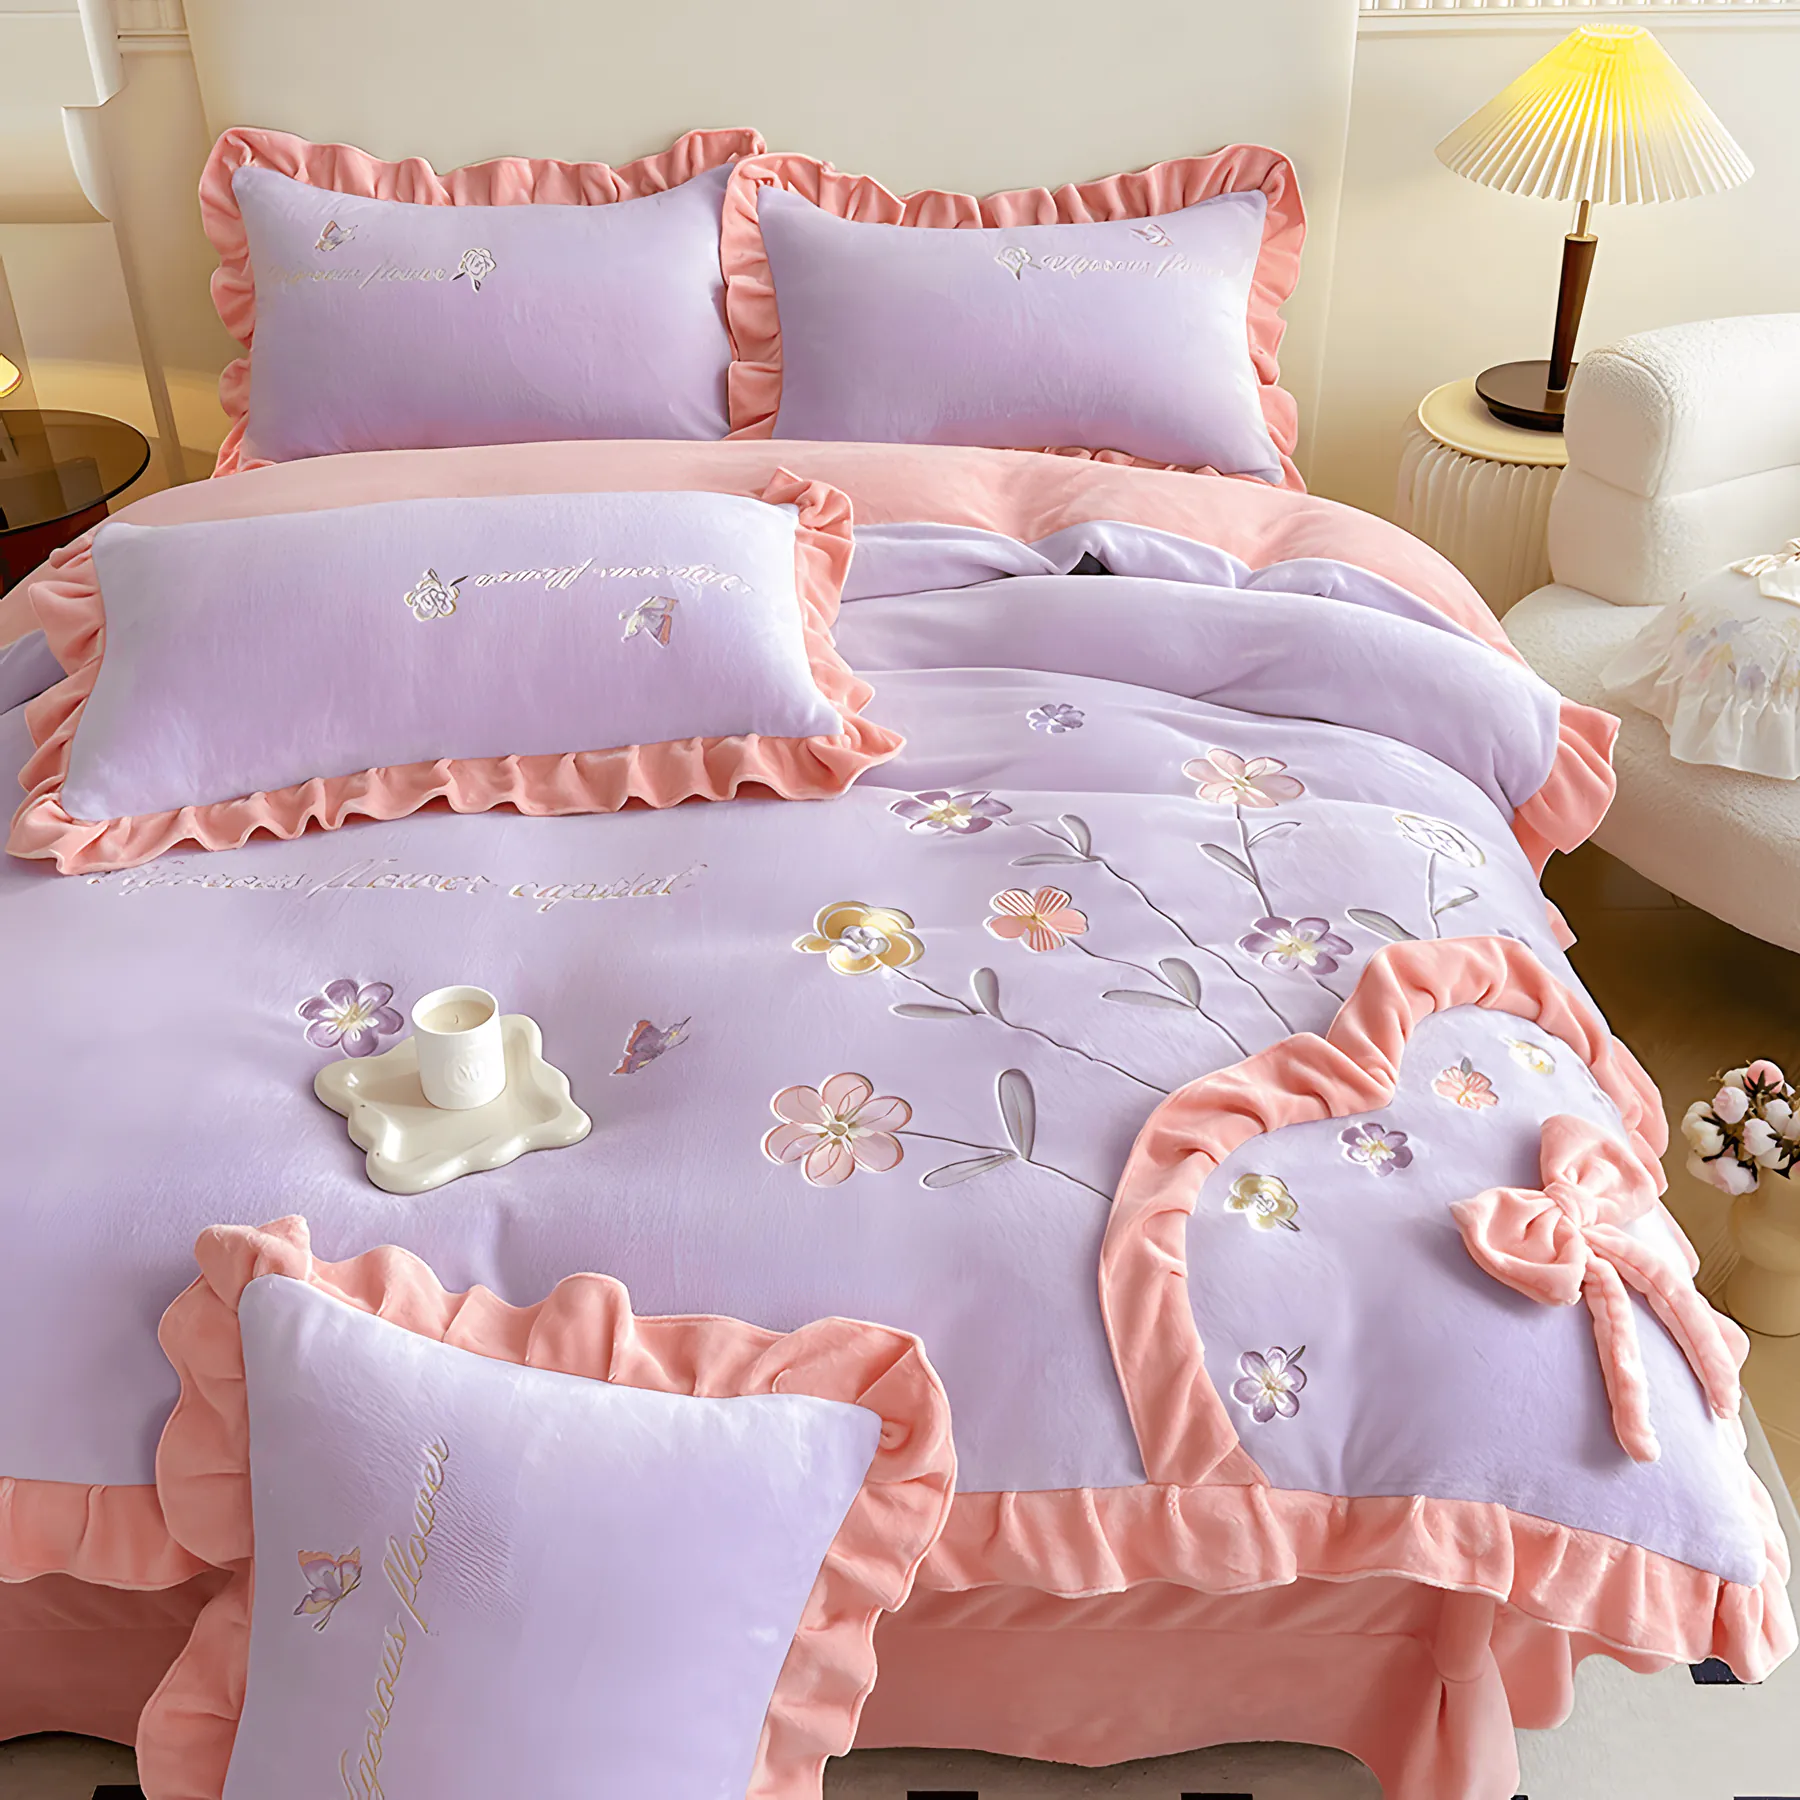 Romantic Milk Fiber Comforter Cover Bed Sheet Pillowcases 4 Pcs Set03